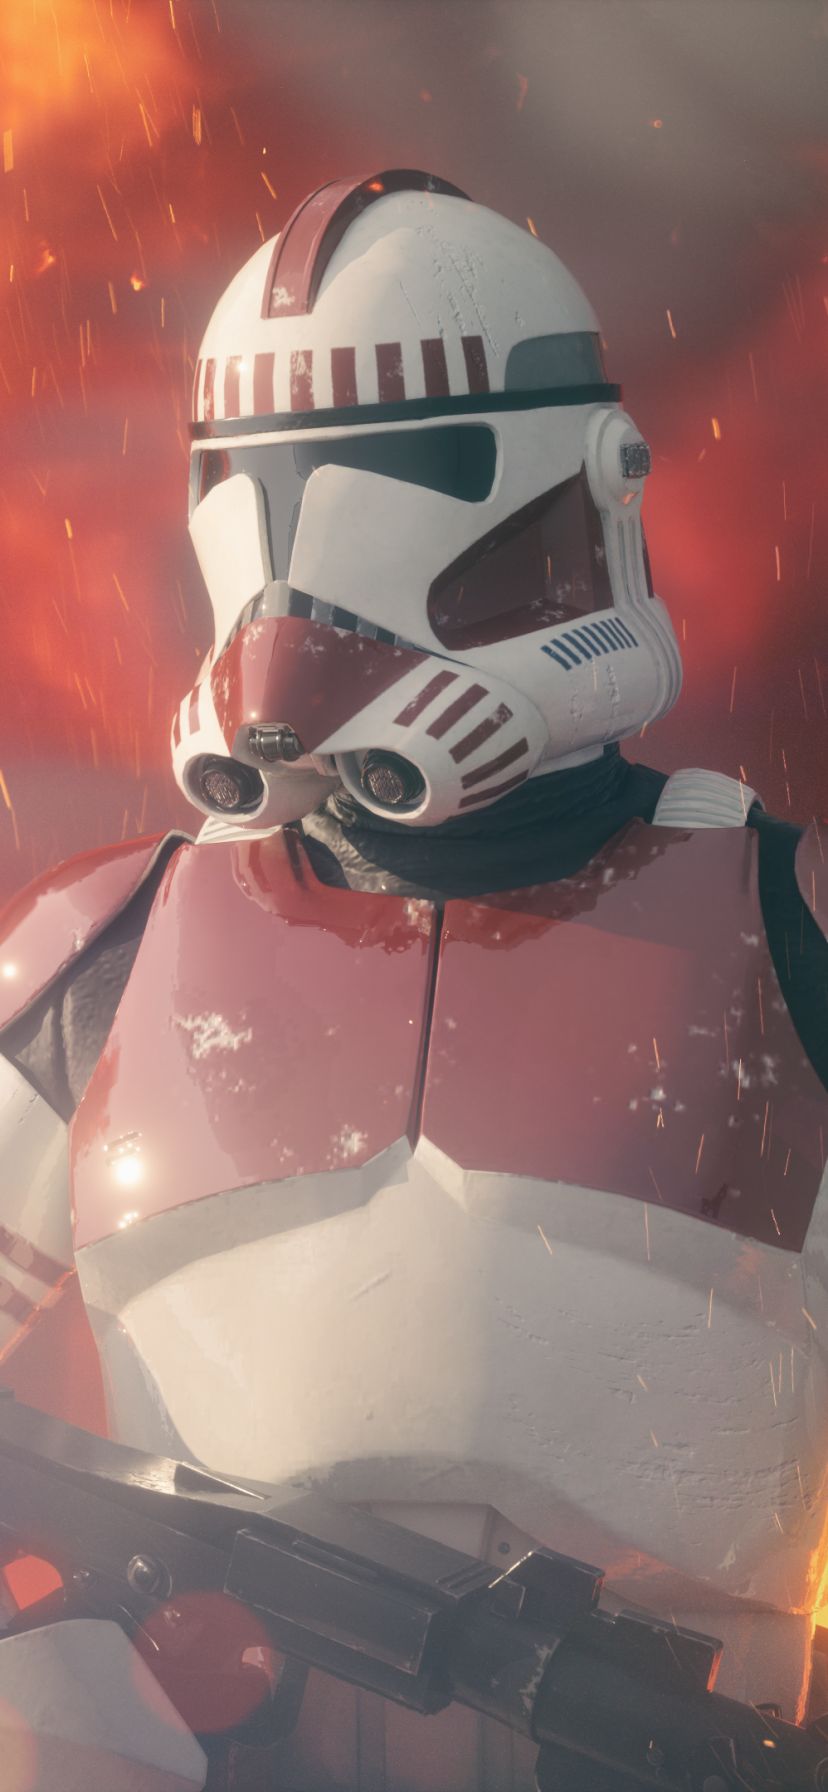 Wallpaper Stormtrooper Star Wars Clone Trooper Art Liquid Background   Download Free Image